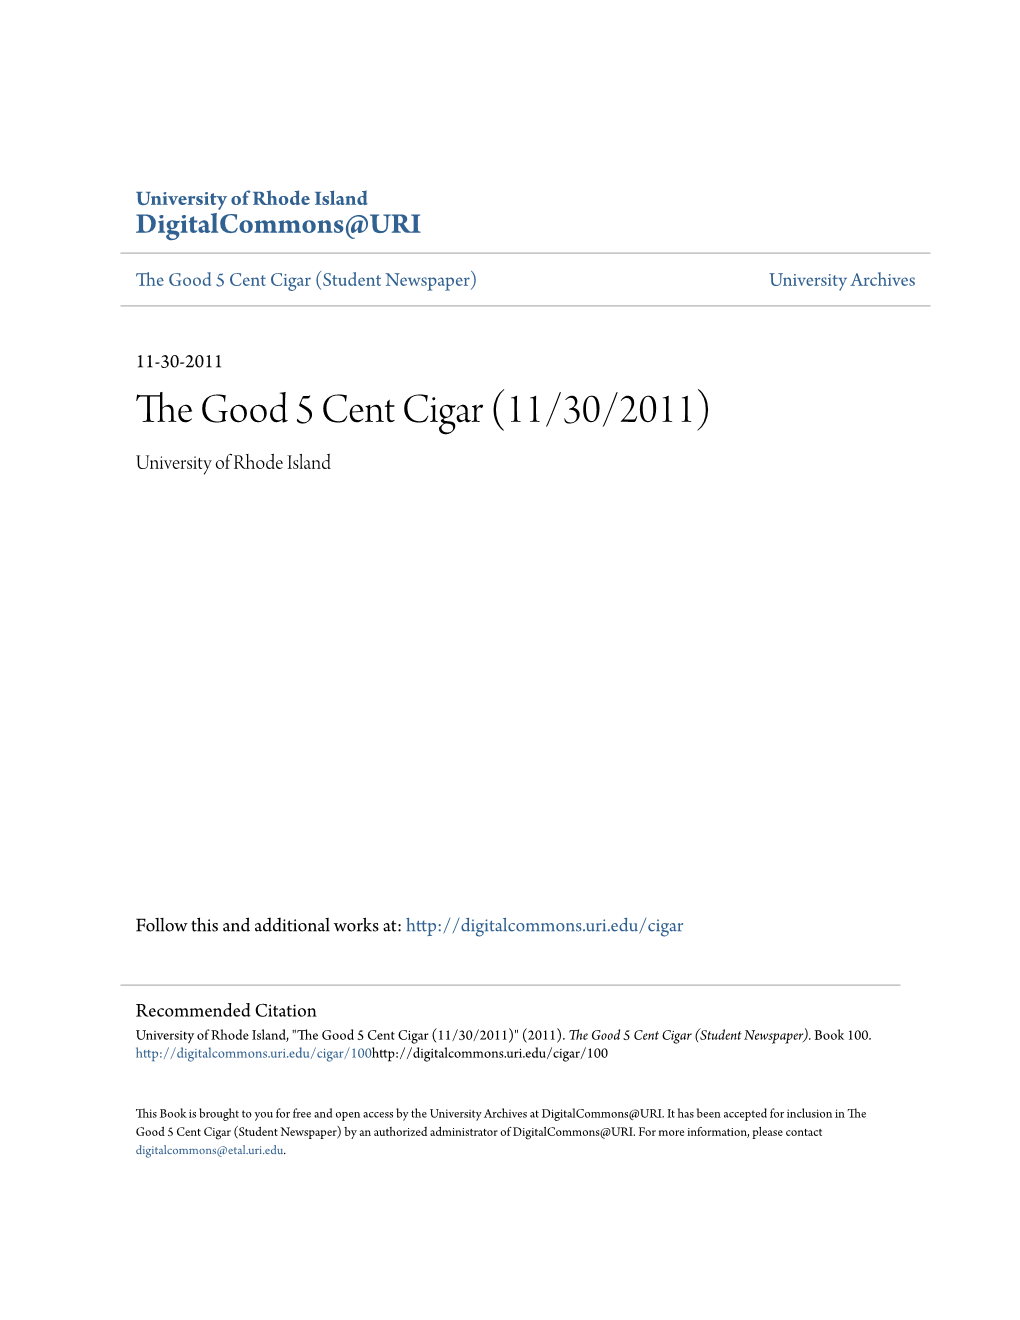 The Good 5 Cent Cigar (11/30/2011) University of Rhode Island